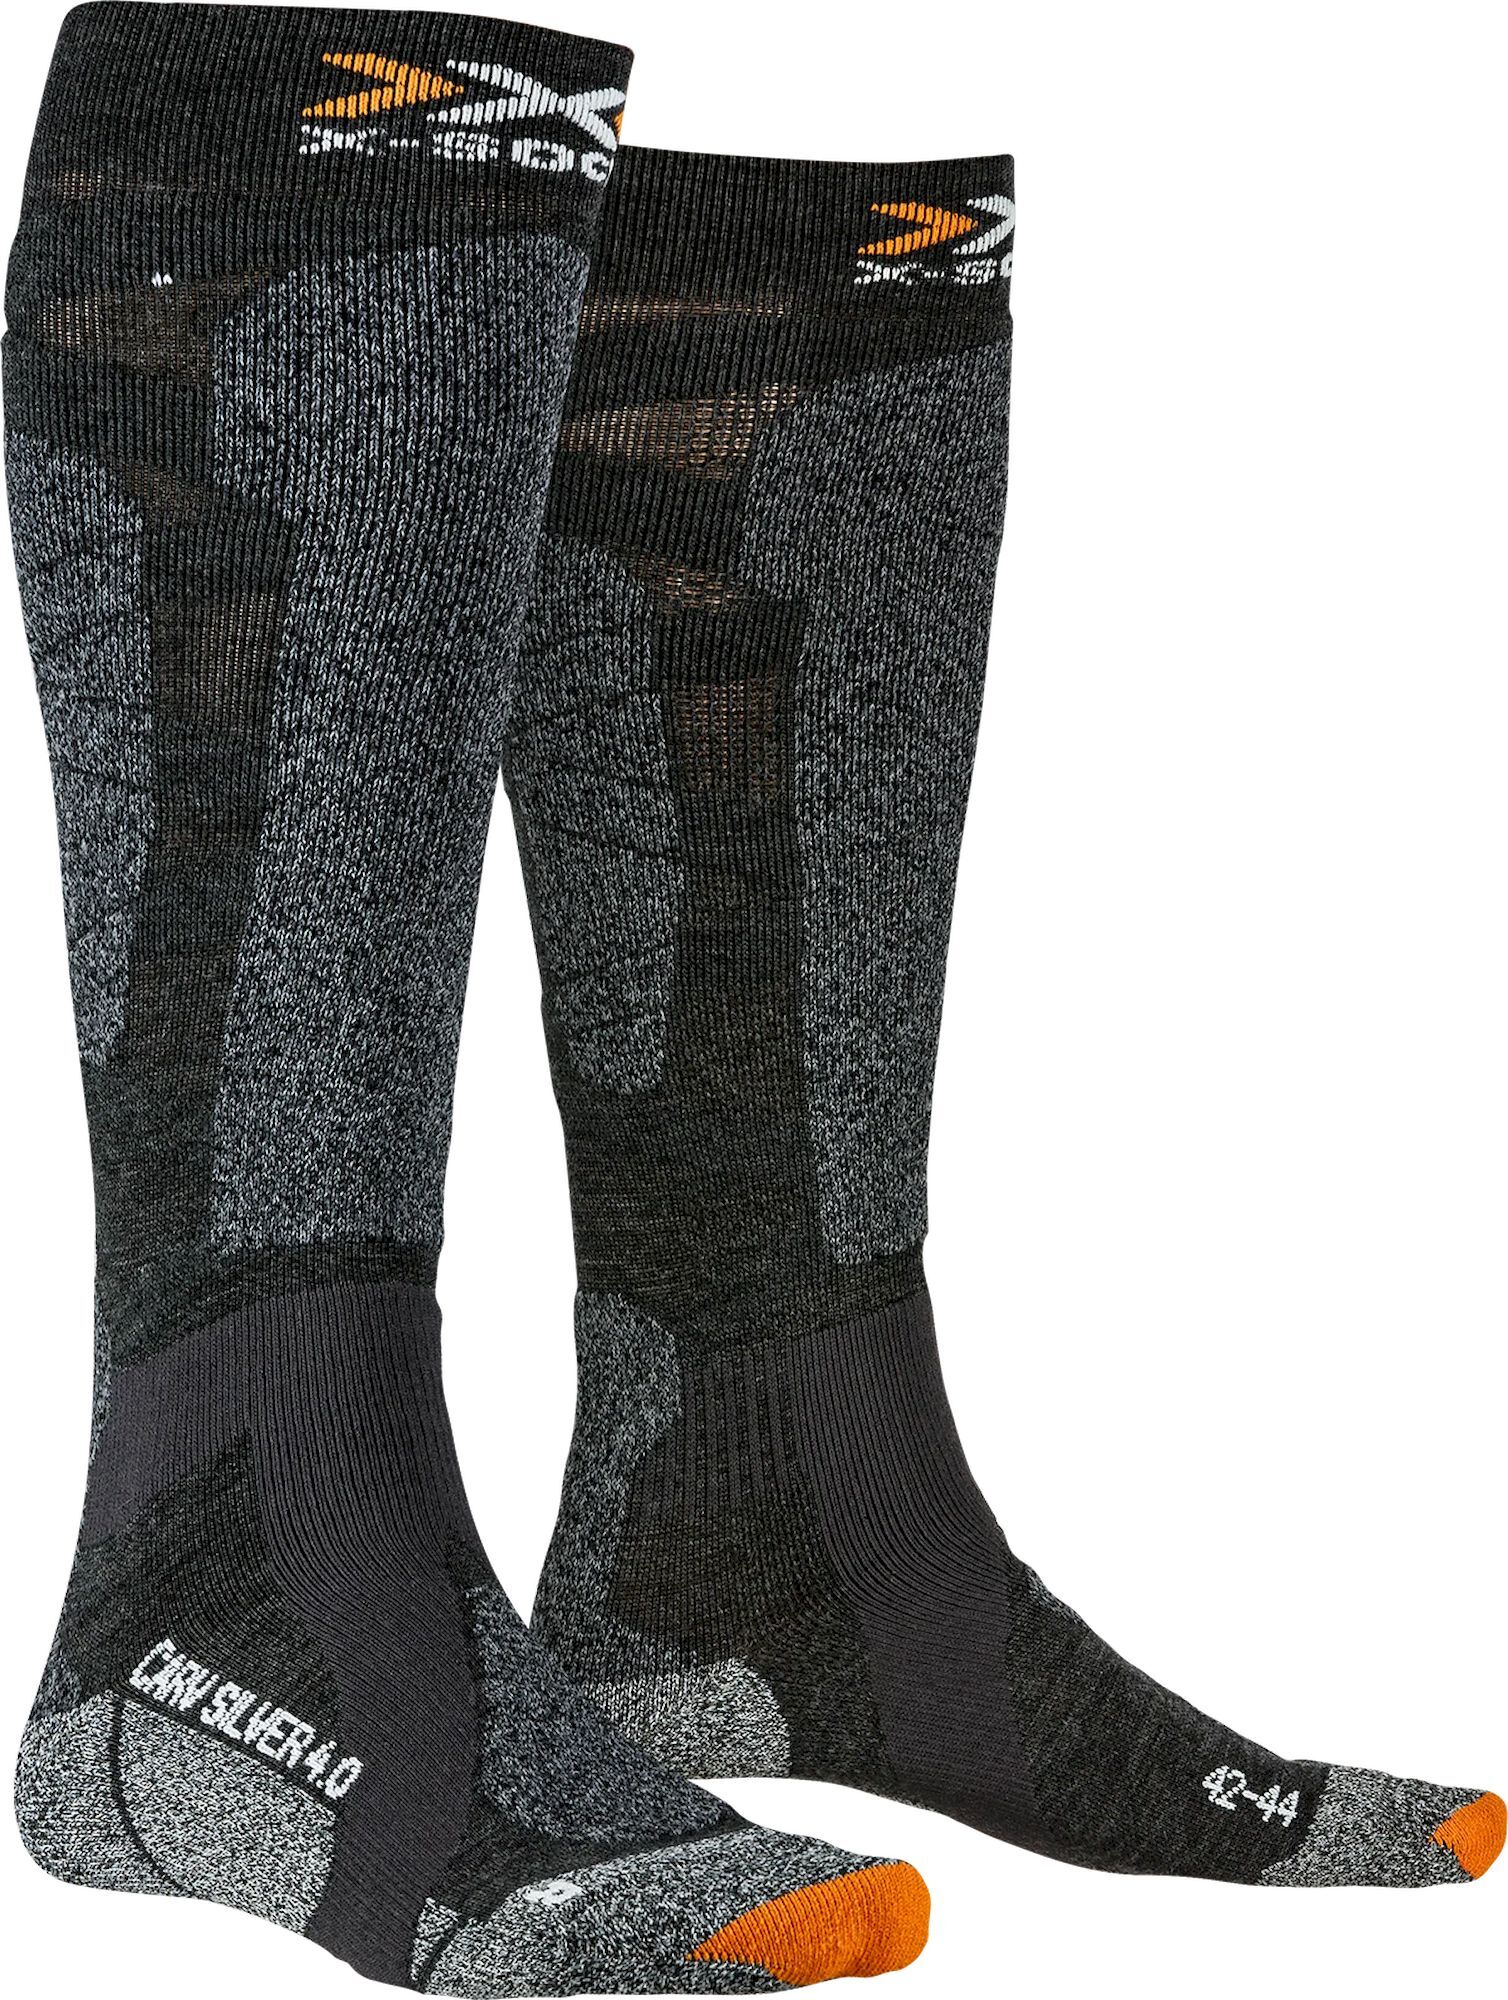 X-Socks Carve Silver 4.0 - Calcetines de esquí